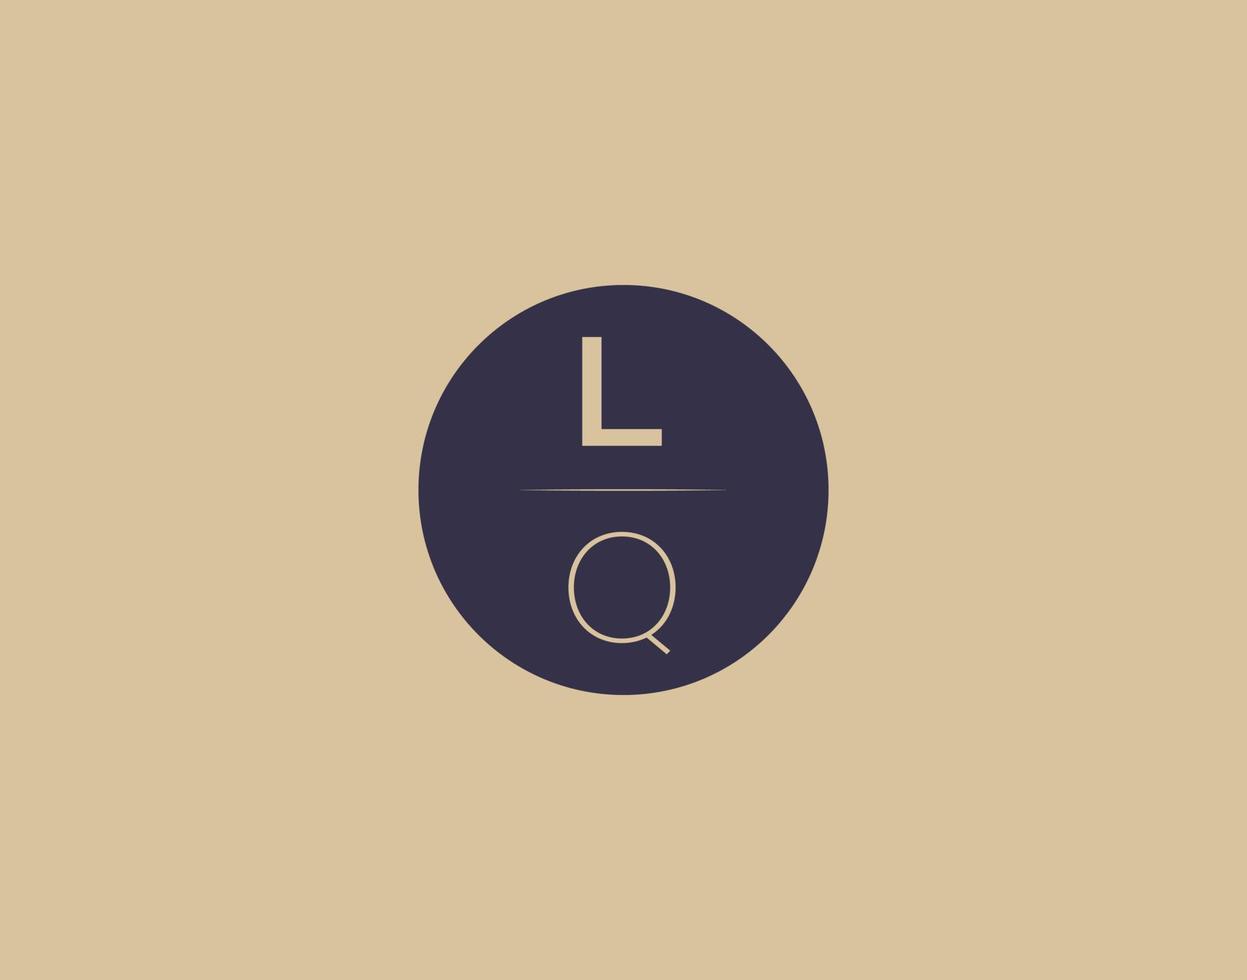 lq brev modern elegant logotyp design vektor bilder